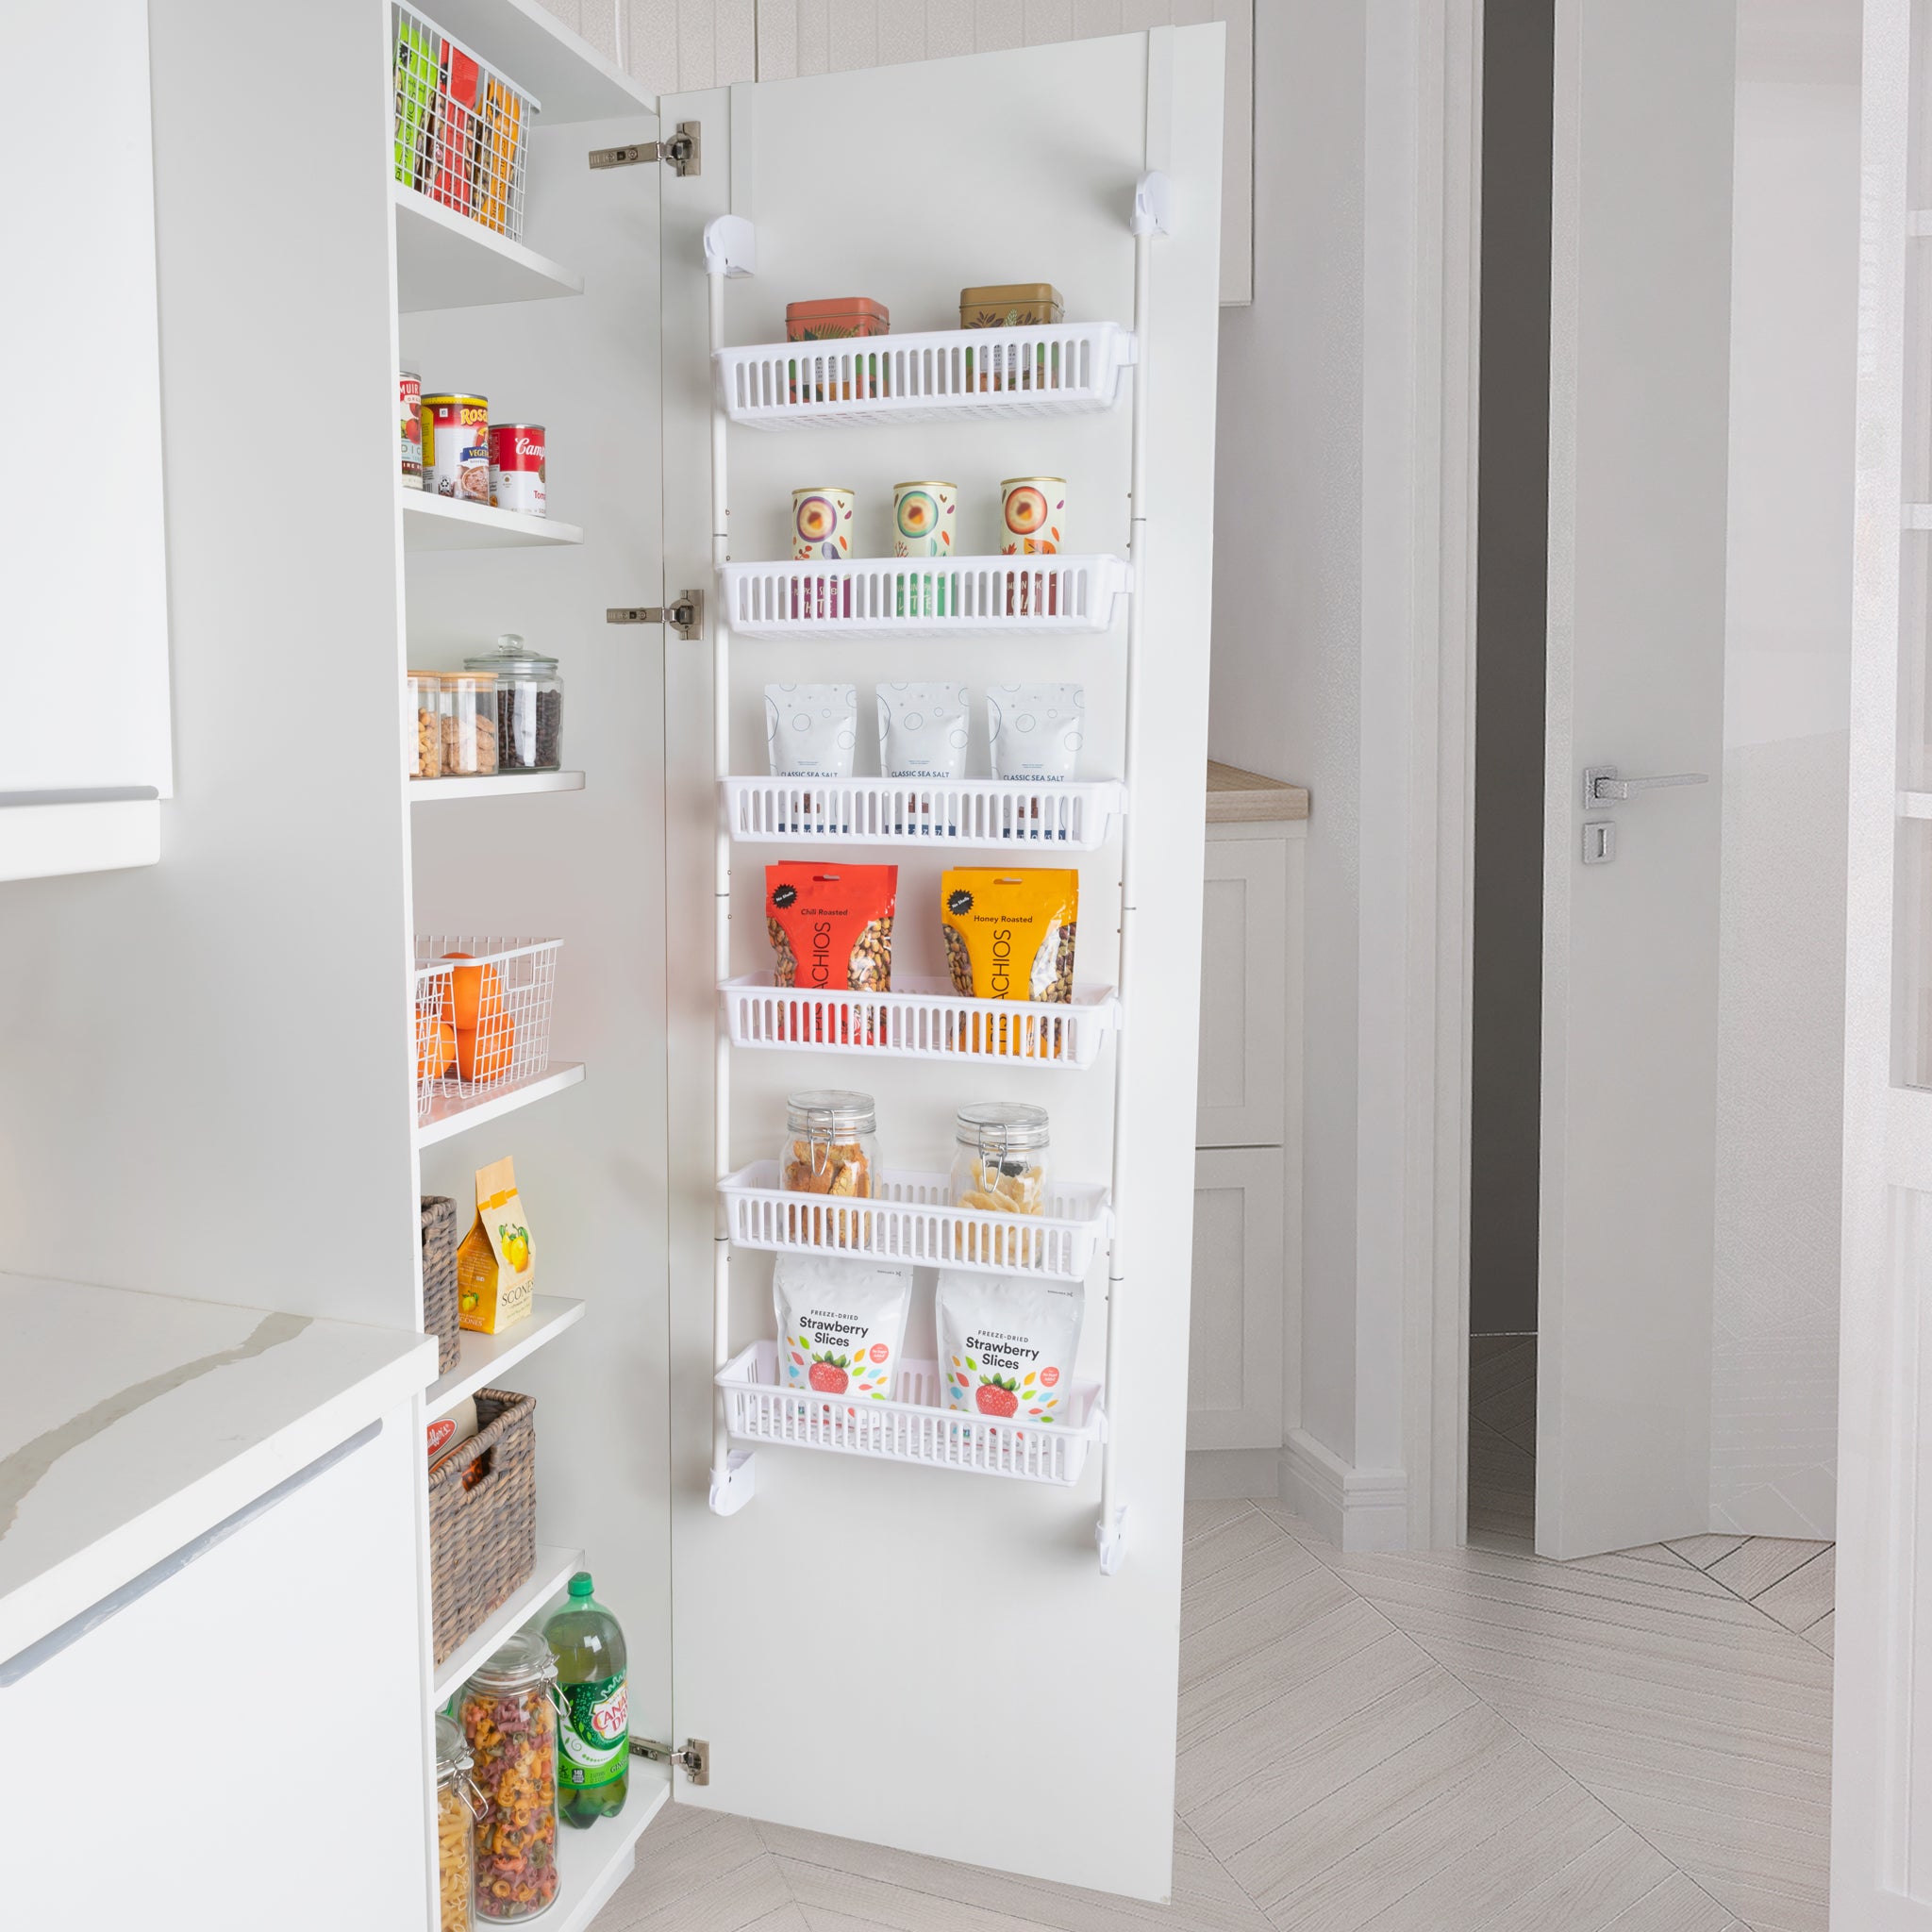 mDesign Large Wall Mount Vitamin Storage Organizer Shelf, 3 Tier - White